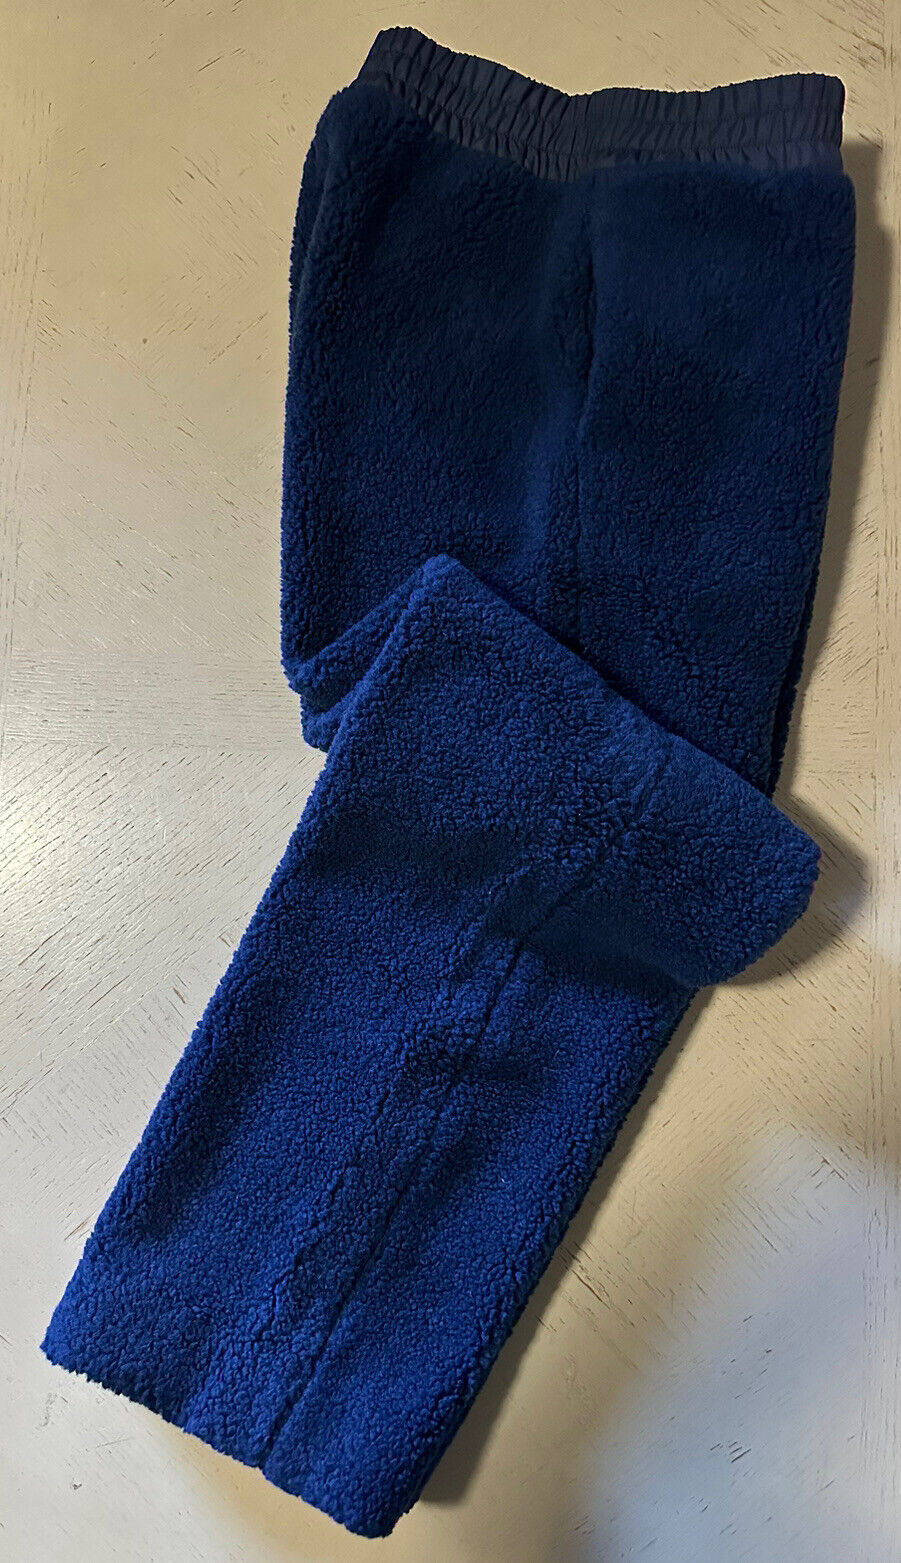 Neue 1450 $ Fendi Herren Pantalone Woll-Teddyhose, Blau, 32 US/48 Eu, Irland